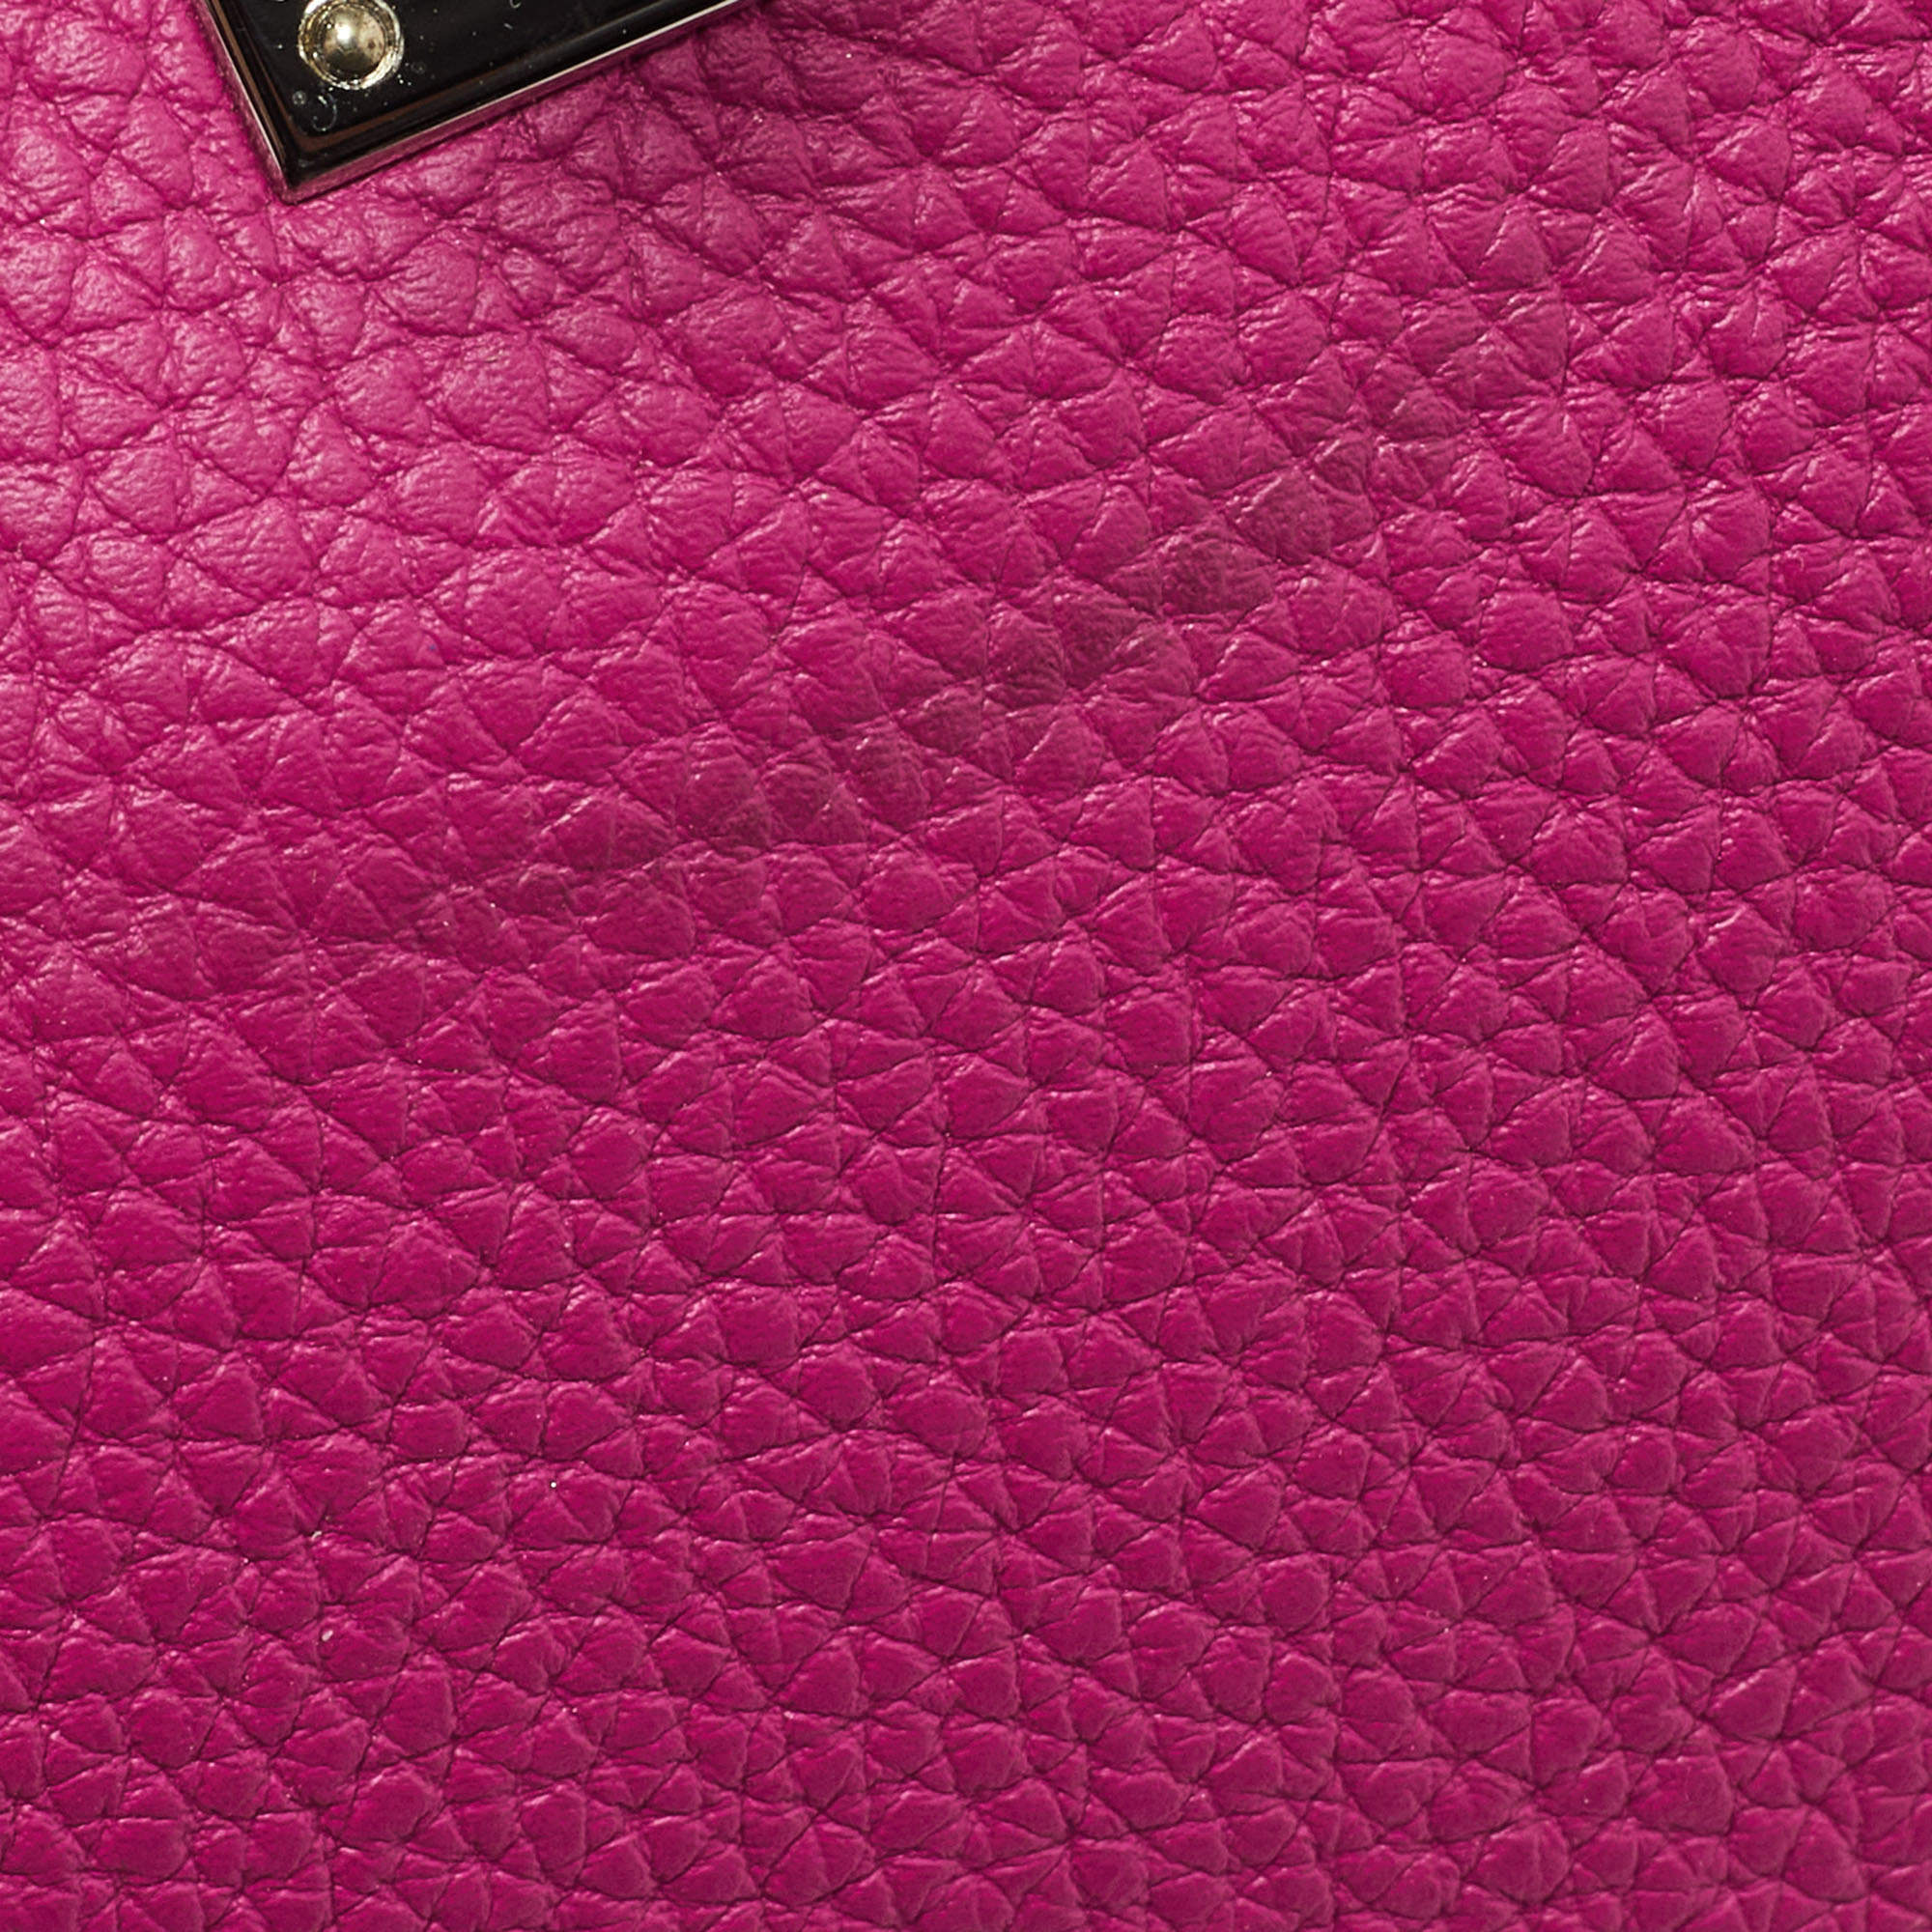 Hermès Birkin 25 Magnolia Togo Palladium Hardware – ZAK BAGS ©️